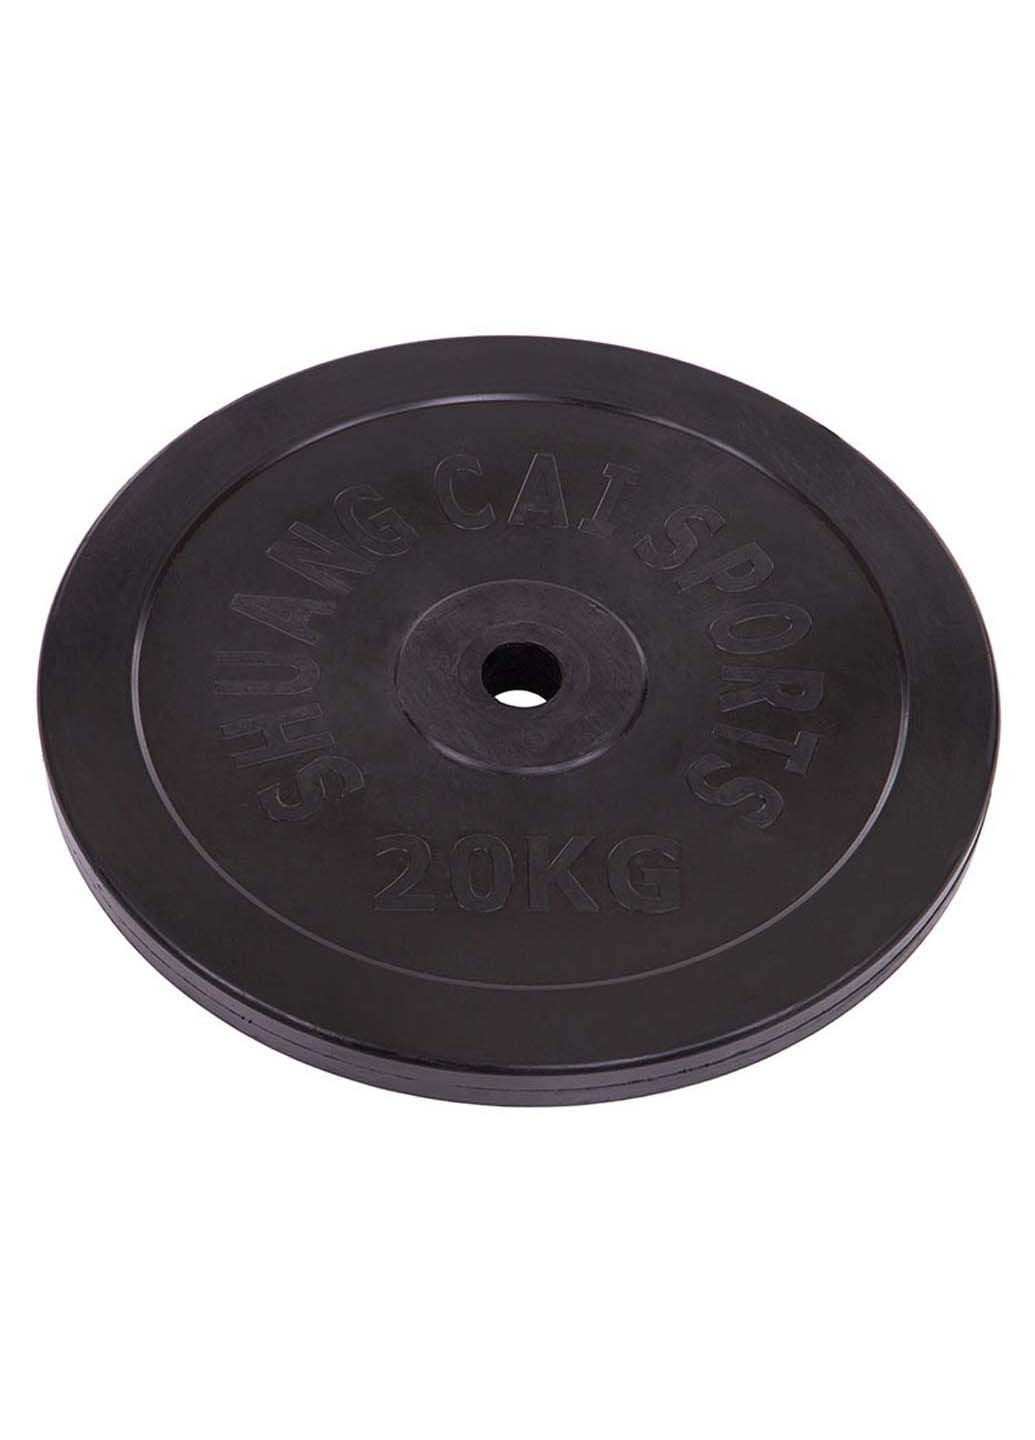 Млинці диски гумові Shuang Cai Sports TA-2188 20 кг FDSO (286043694)